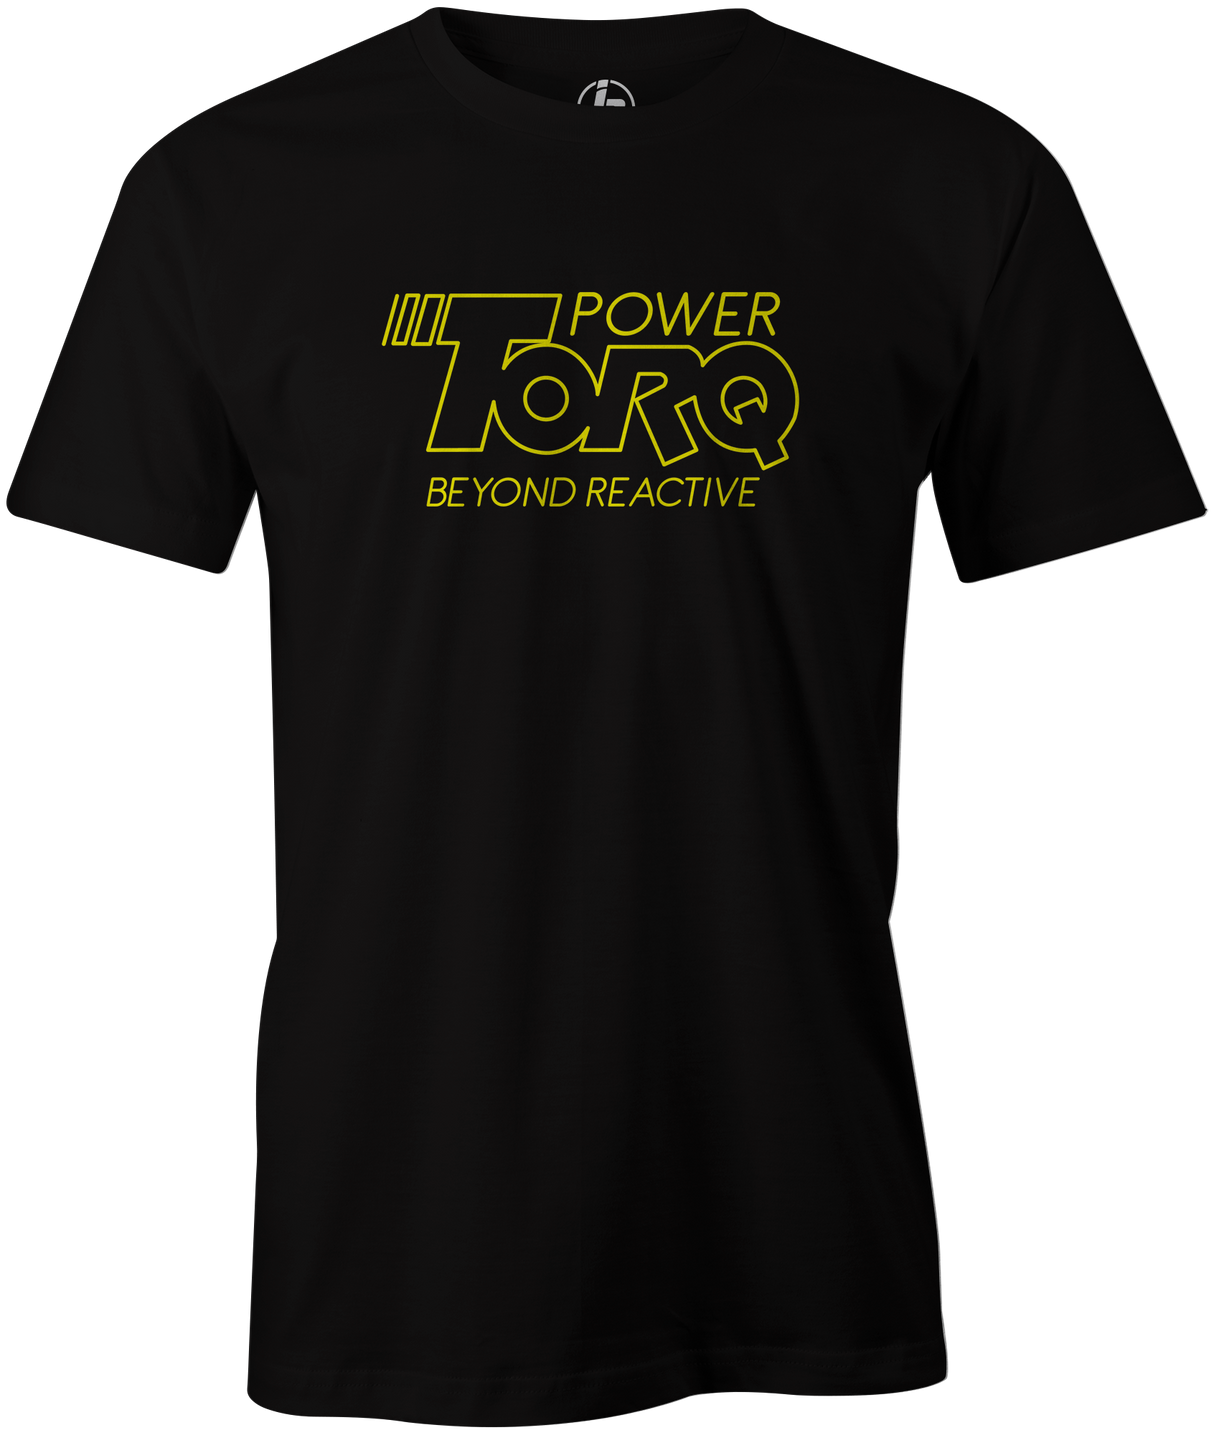 Power TorQ Men's T-Shirt, Black, bowling, bowling ball, columbia 300, old school, throwback, tshirt, tee, tee-shirt, tee shirt.